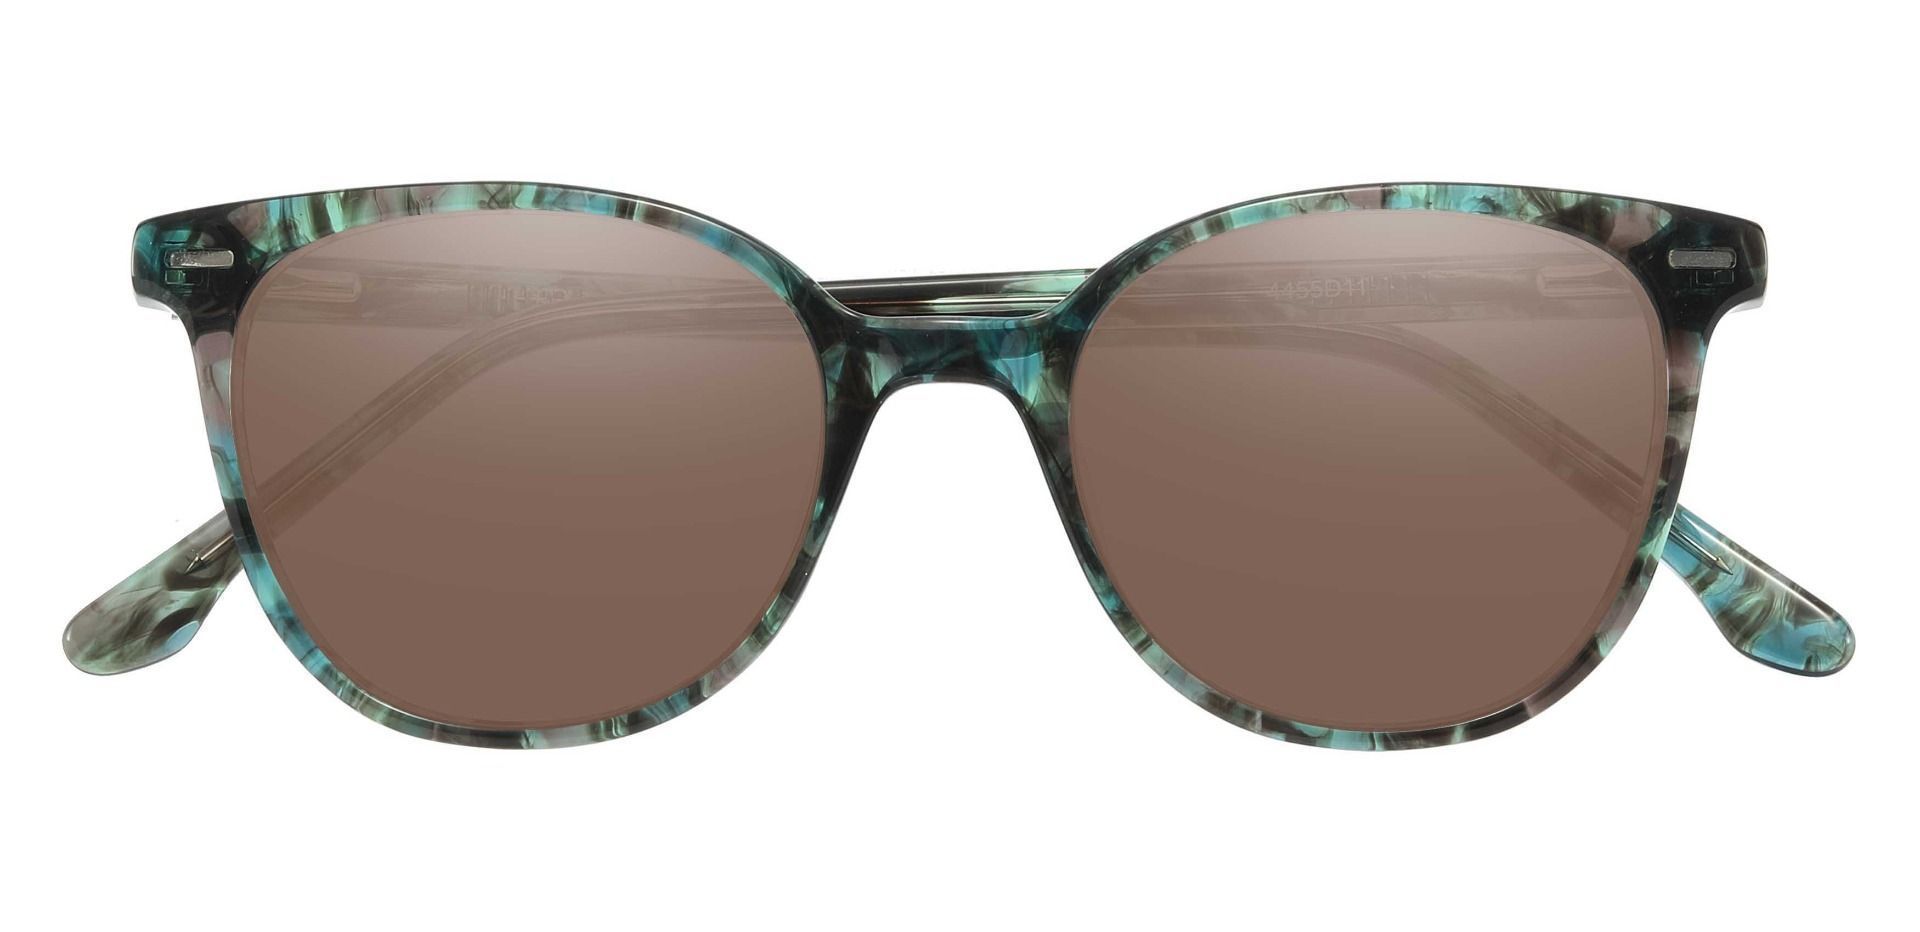 Chili Oval Progressive Sunglasses - Green Frame With Brown Lenses